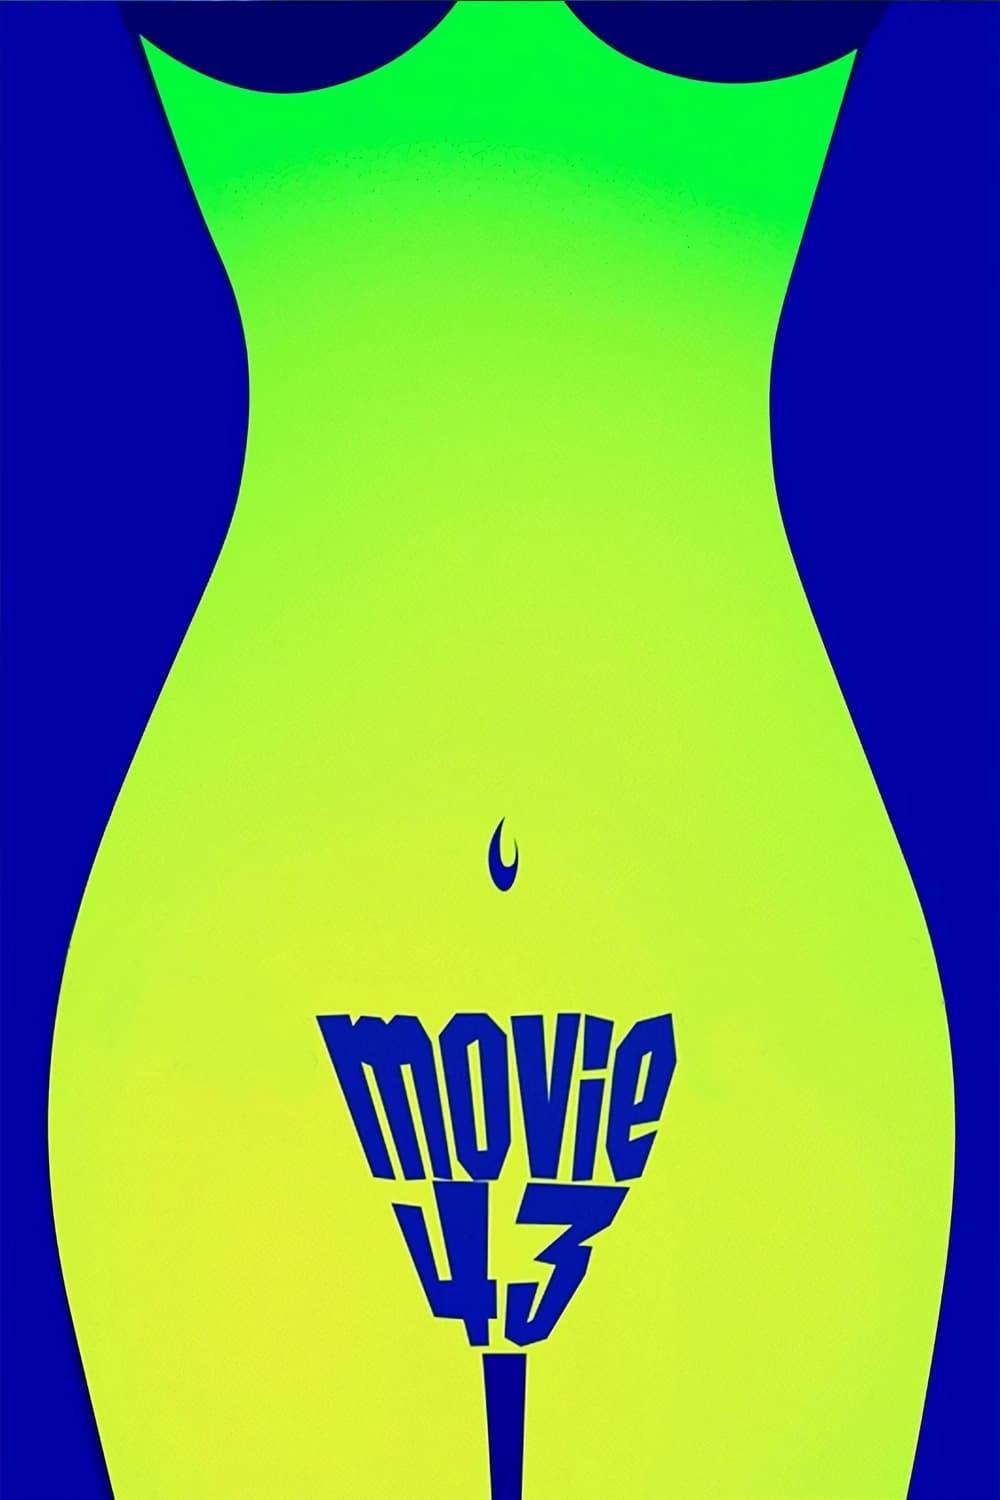 Movie 43 poster